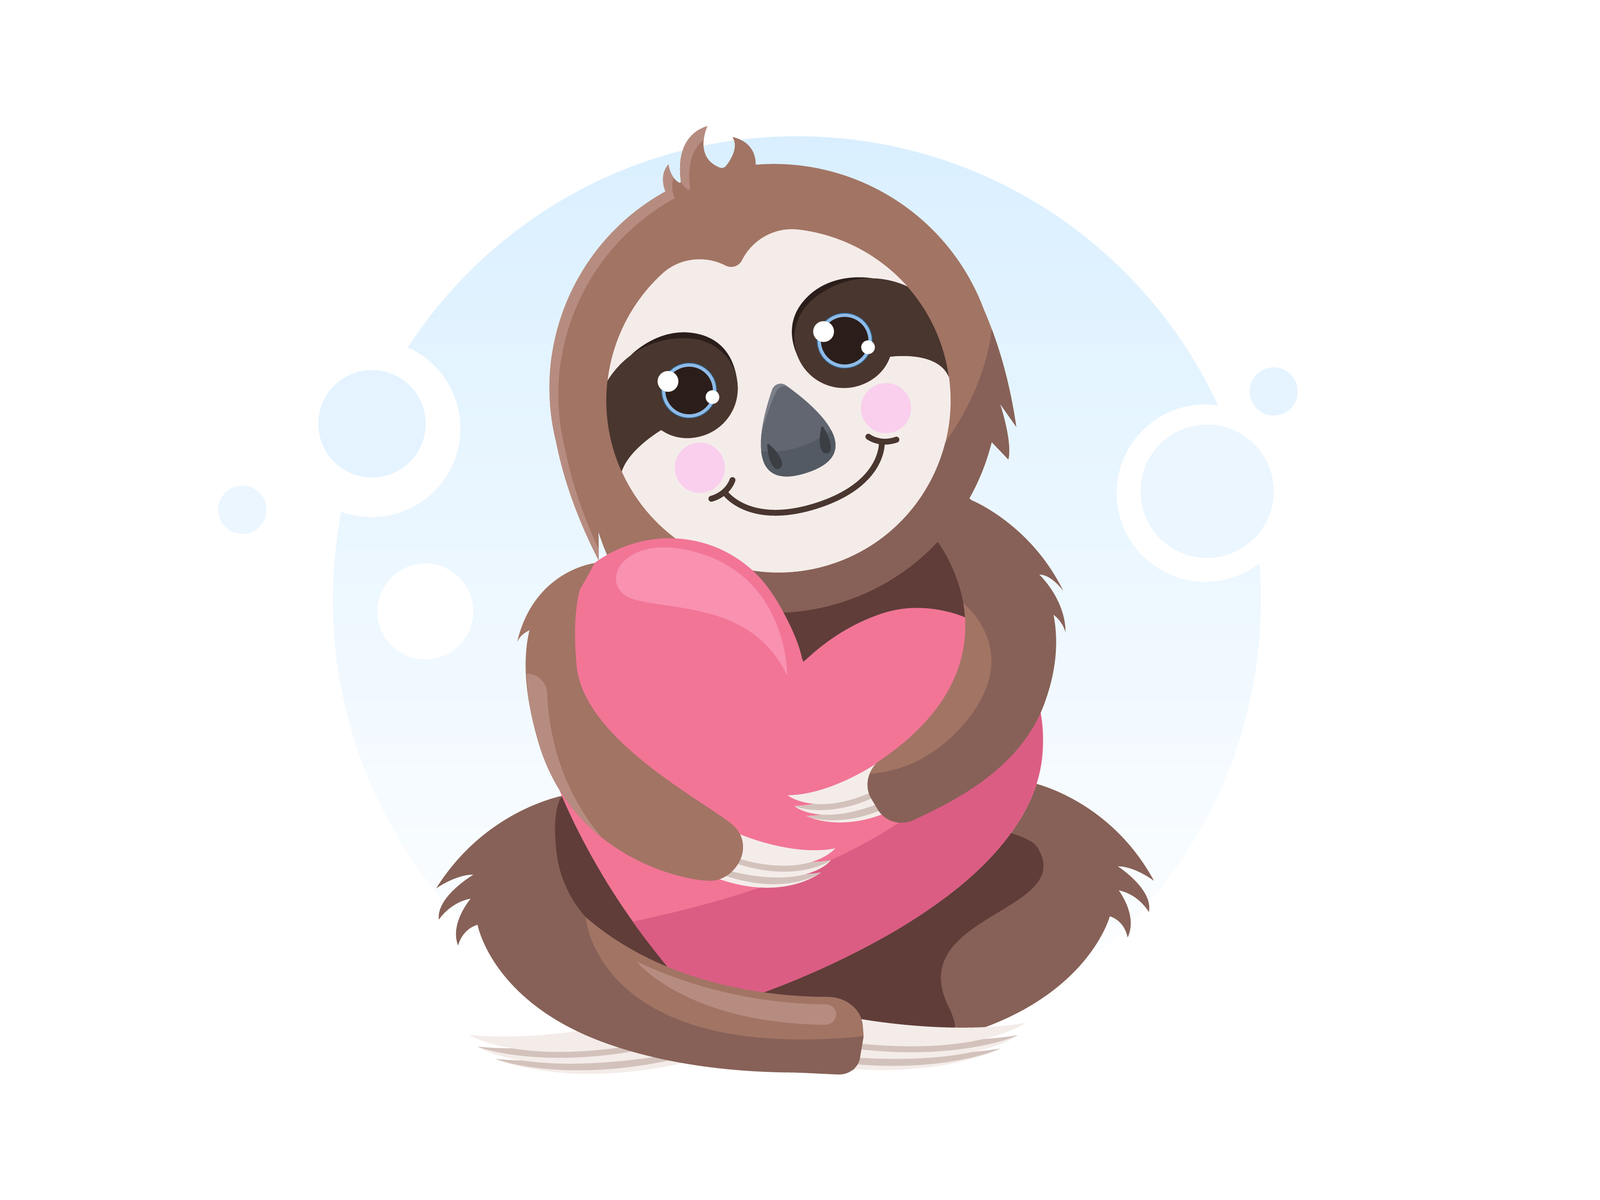 Sloth♥ by Irina on Dribbble